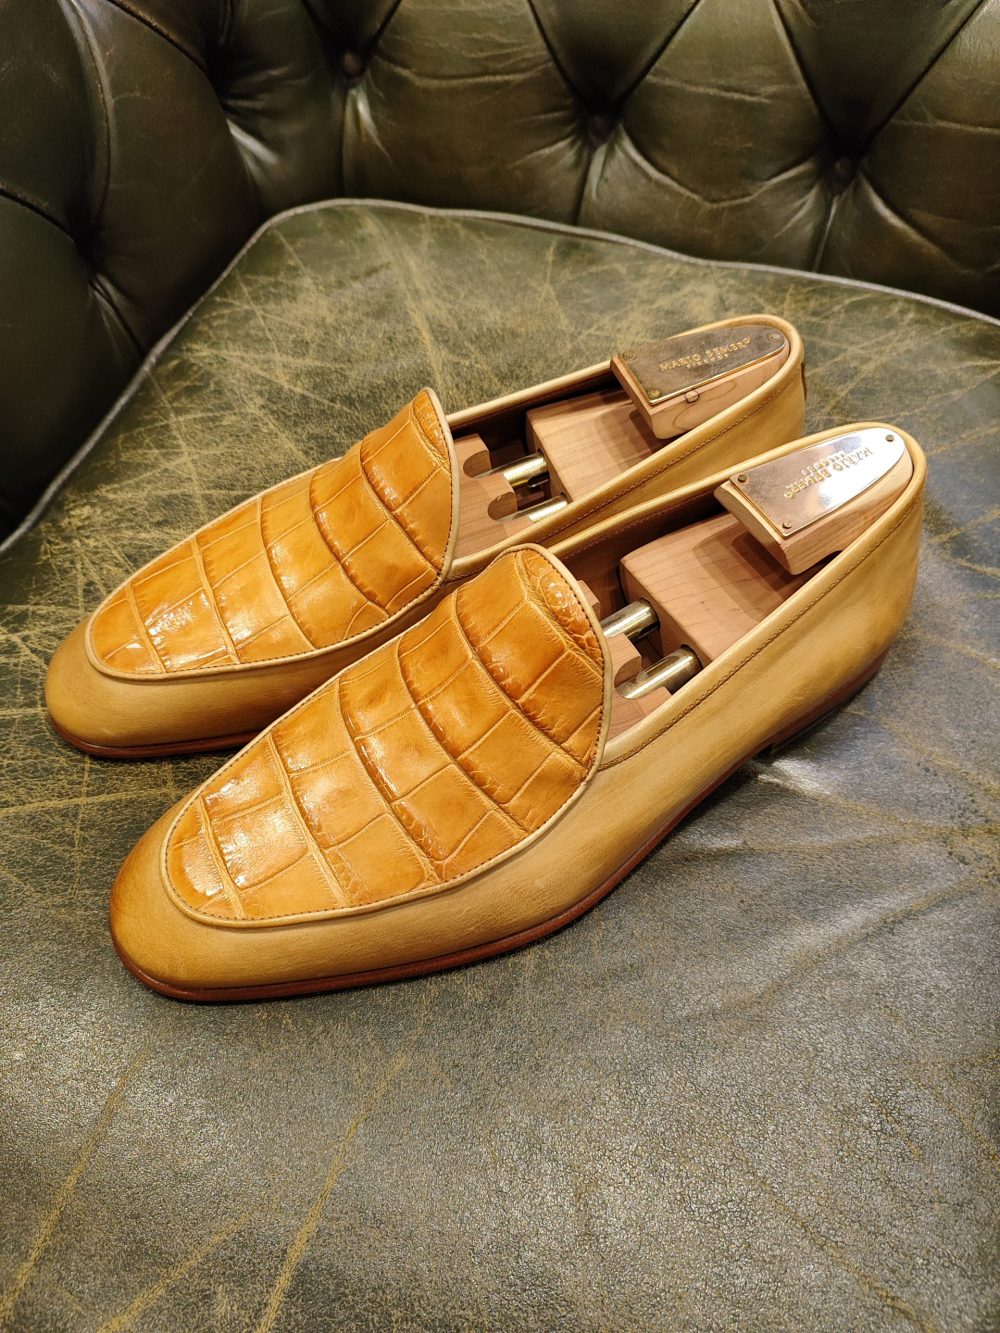 Mario Bemer Firenze Libero custom-shop belgian loafers with croco detail